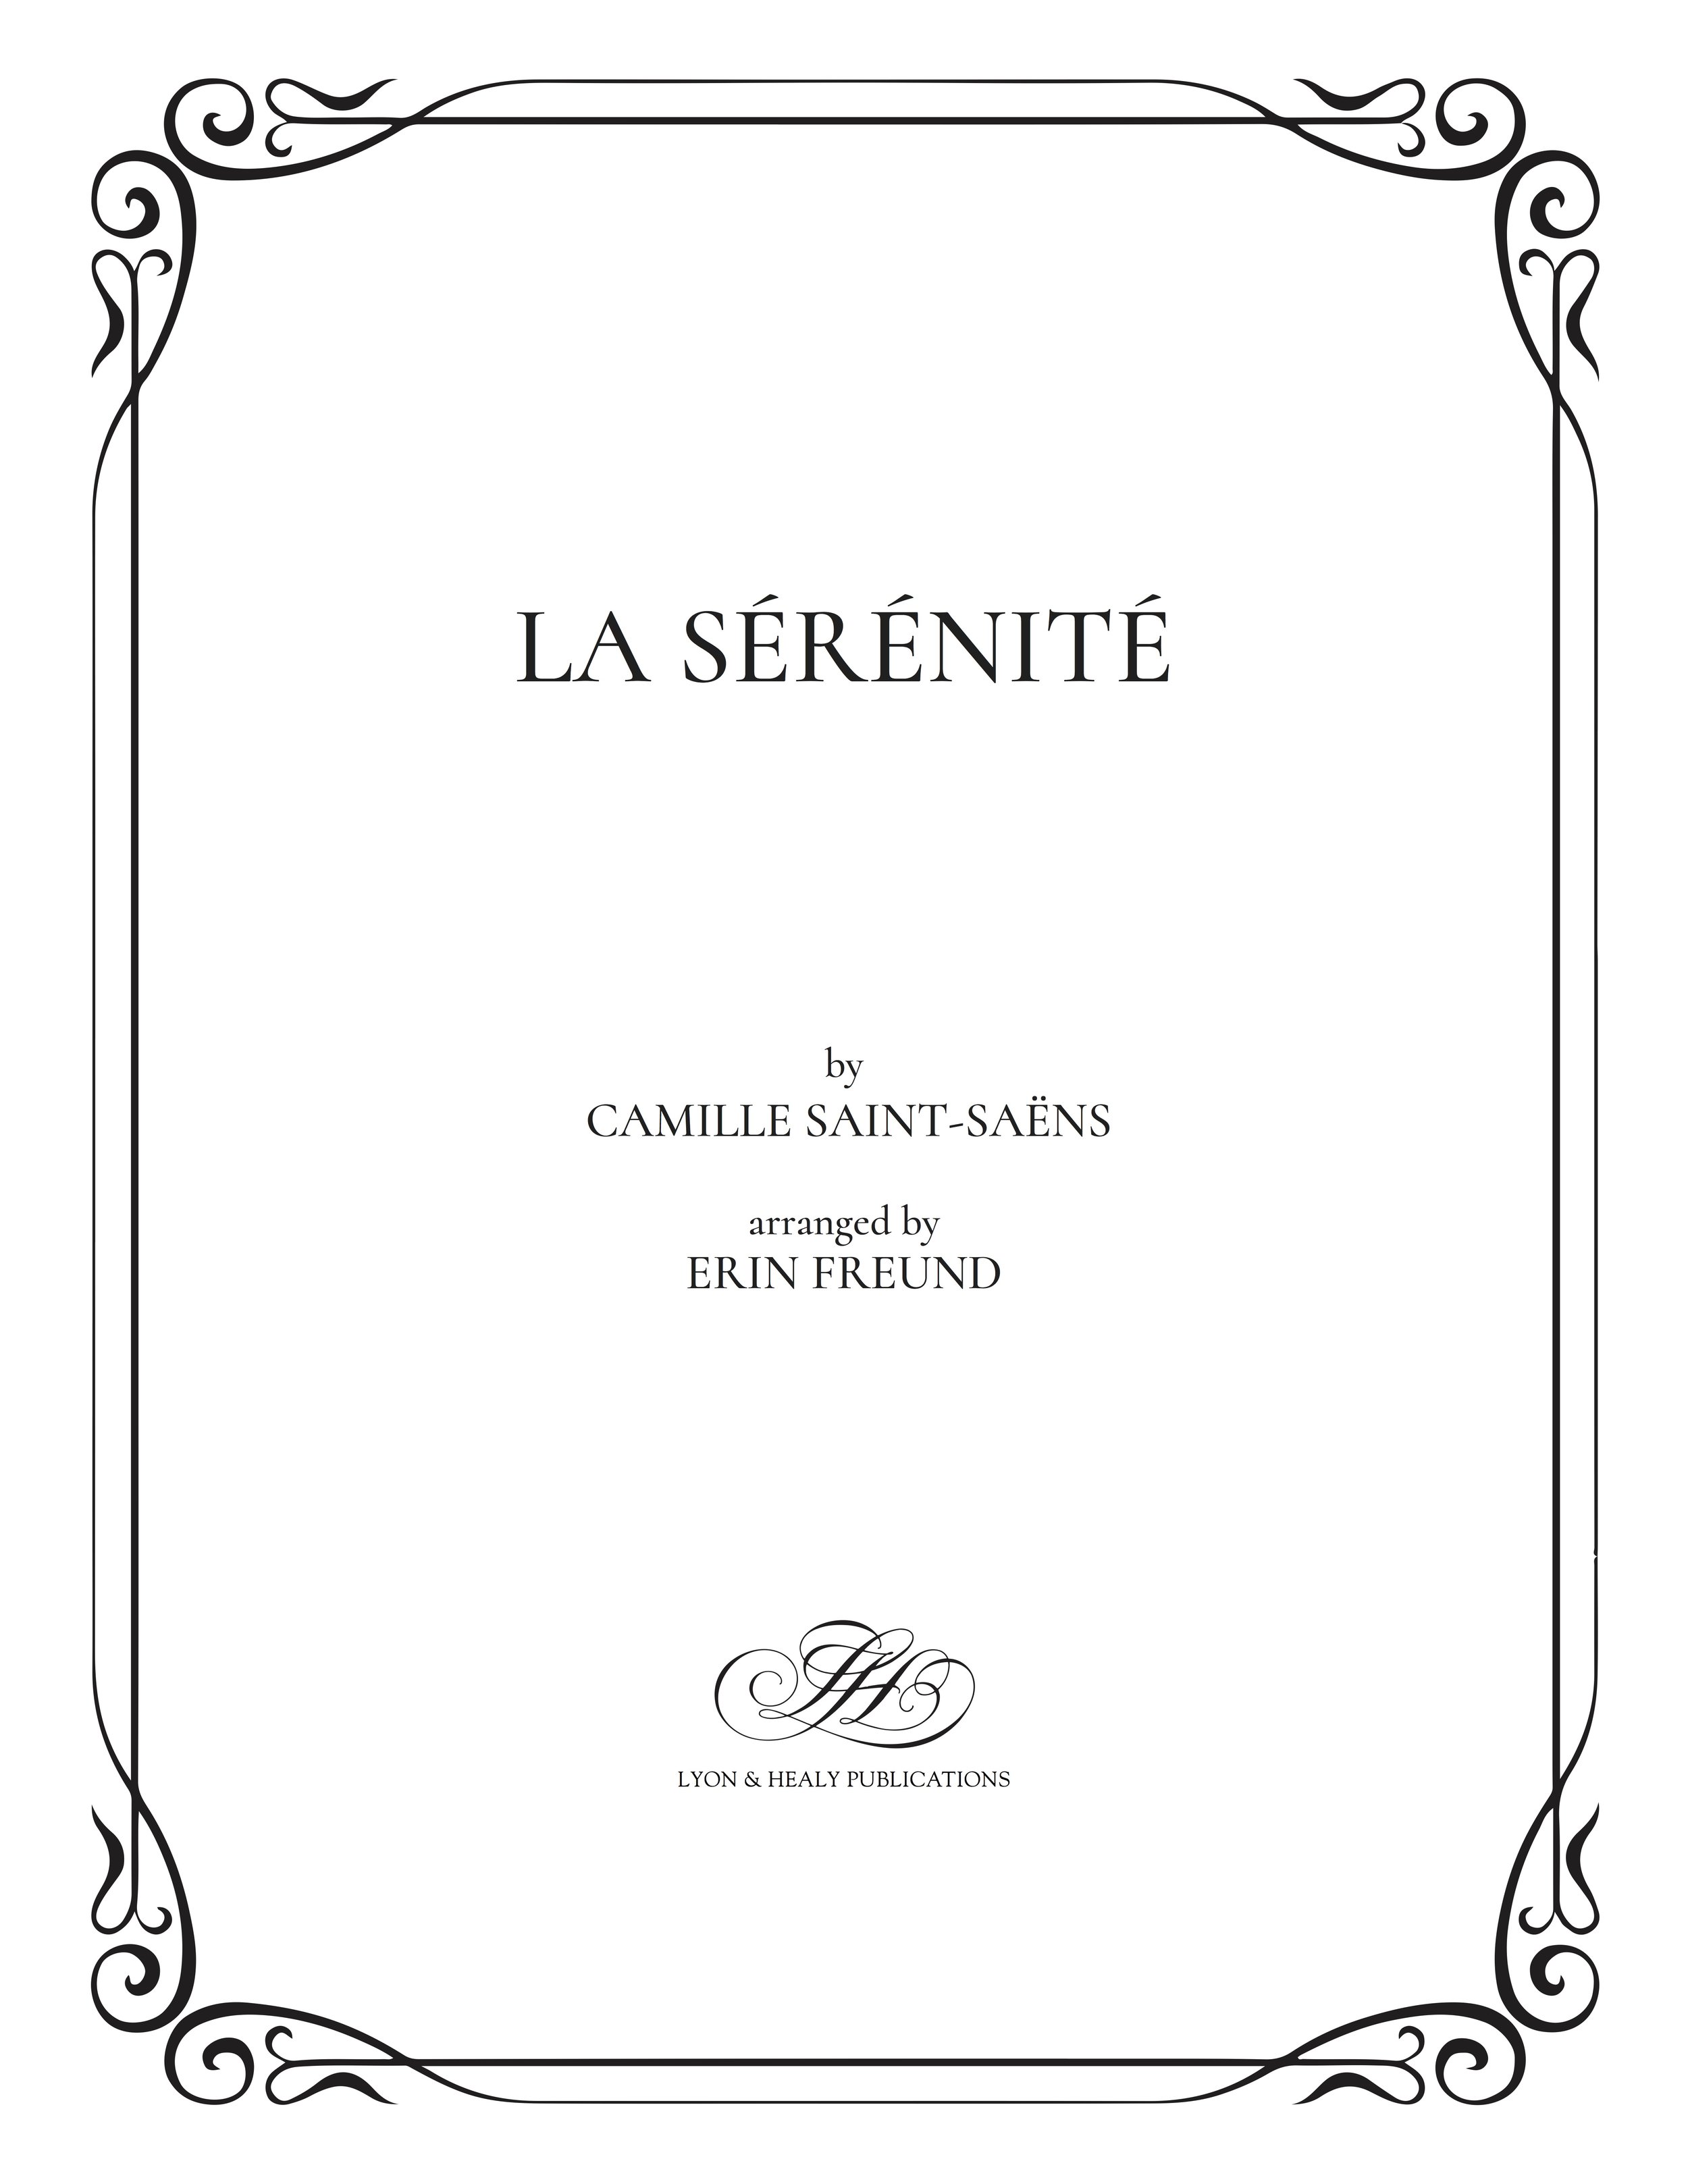 La Sérénité - Saint-Saëns - Freund cover.jpg